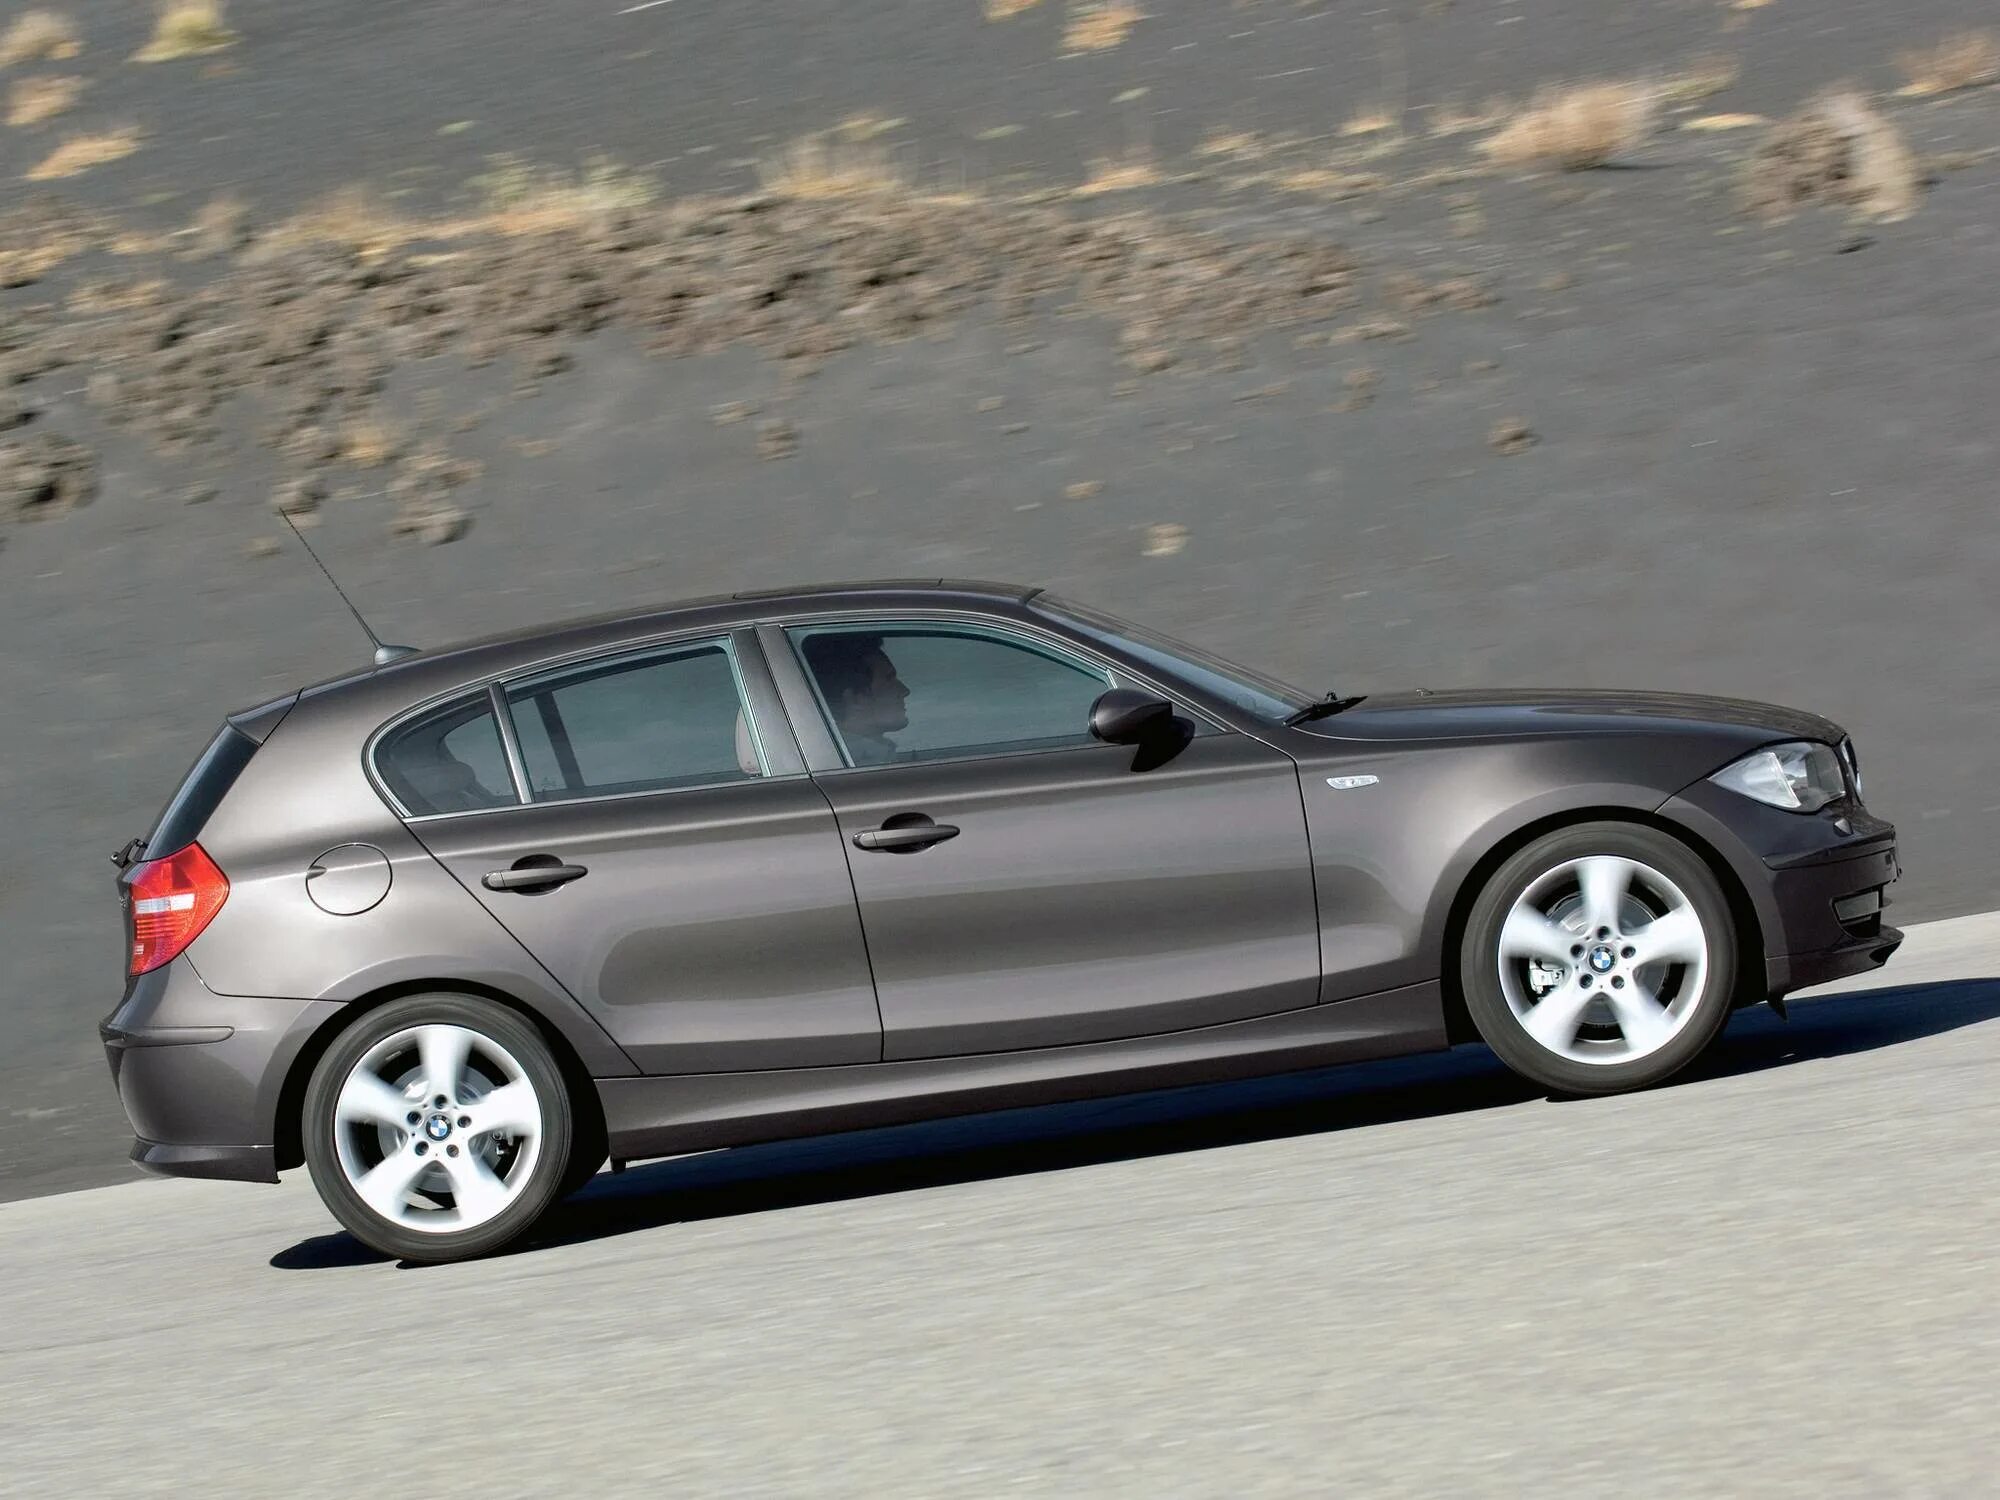 1 к 2007 г. БМВ 116i седан. BMW 1 Series (e87). БМВ 1 хэтчбек 2008. BMW e87 2008.